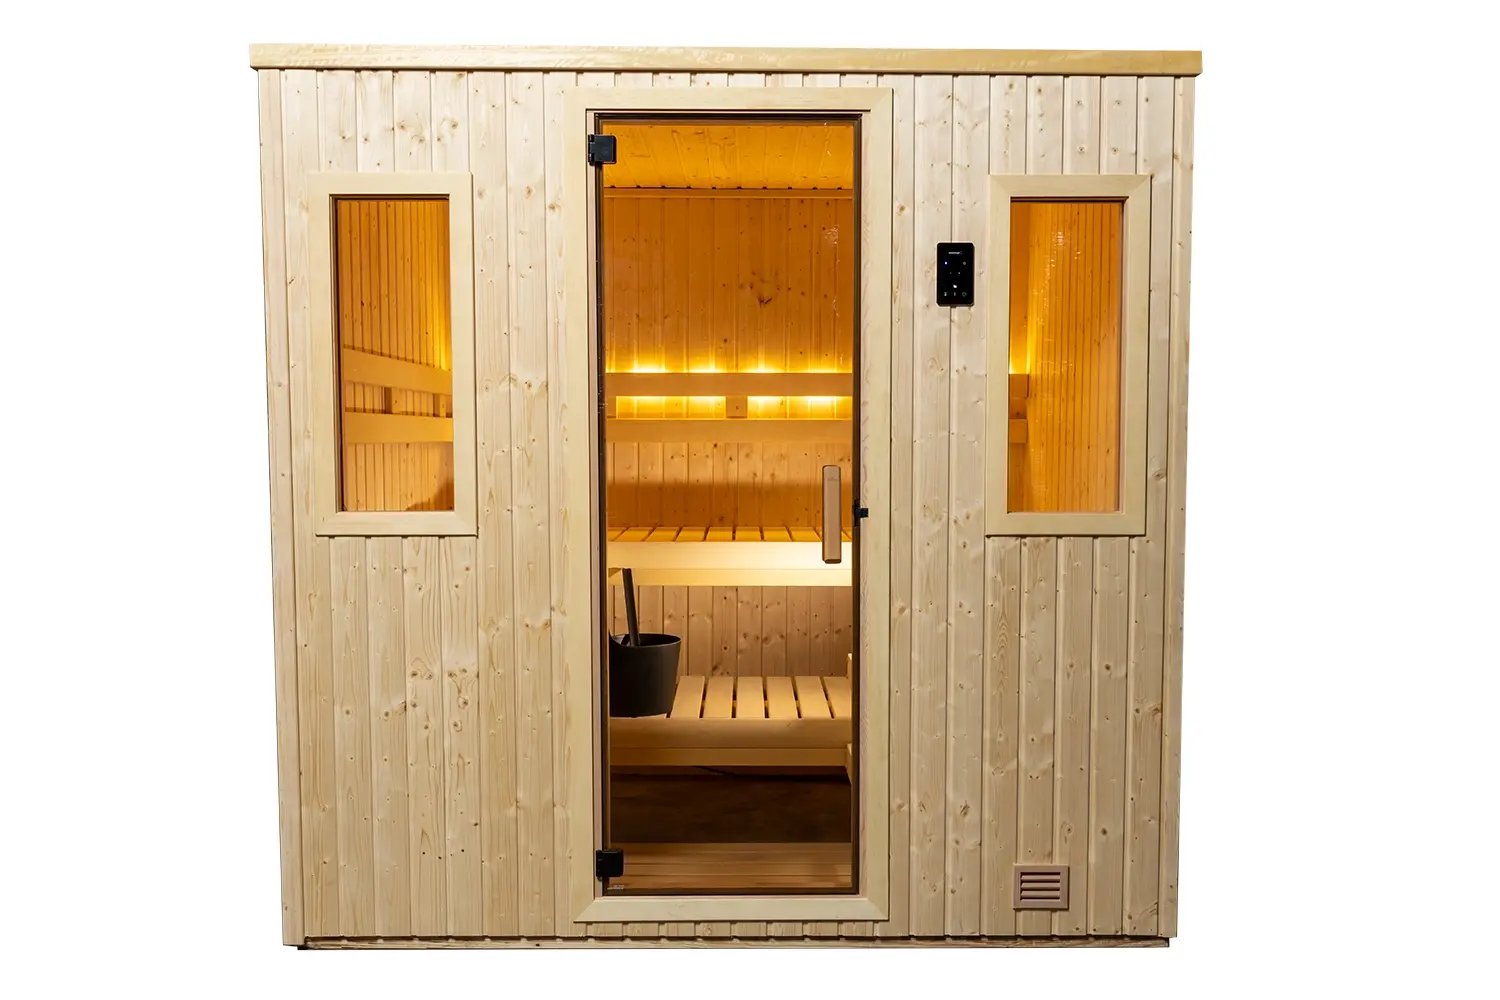 NorthStar 57 traditional sauna